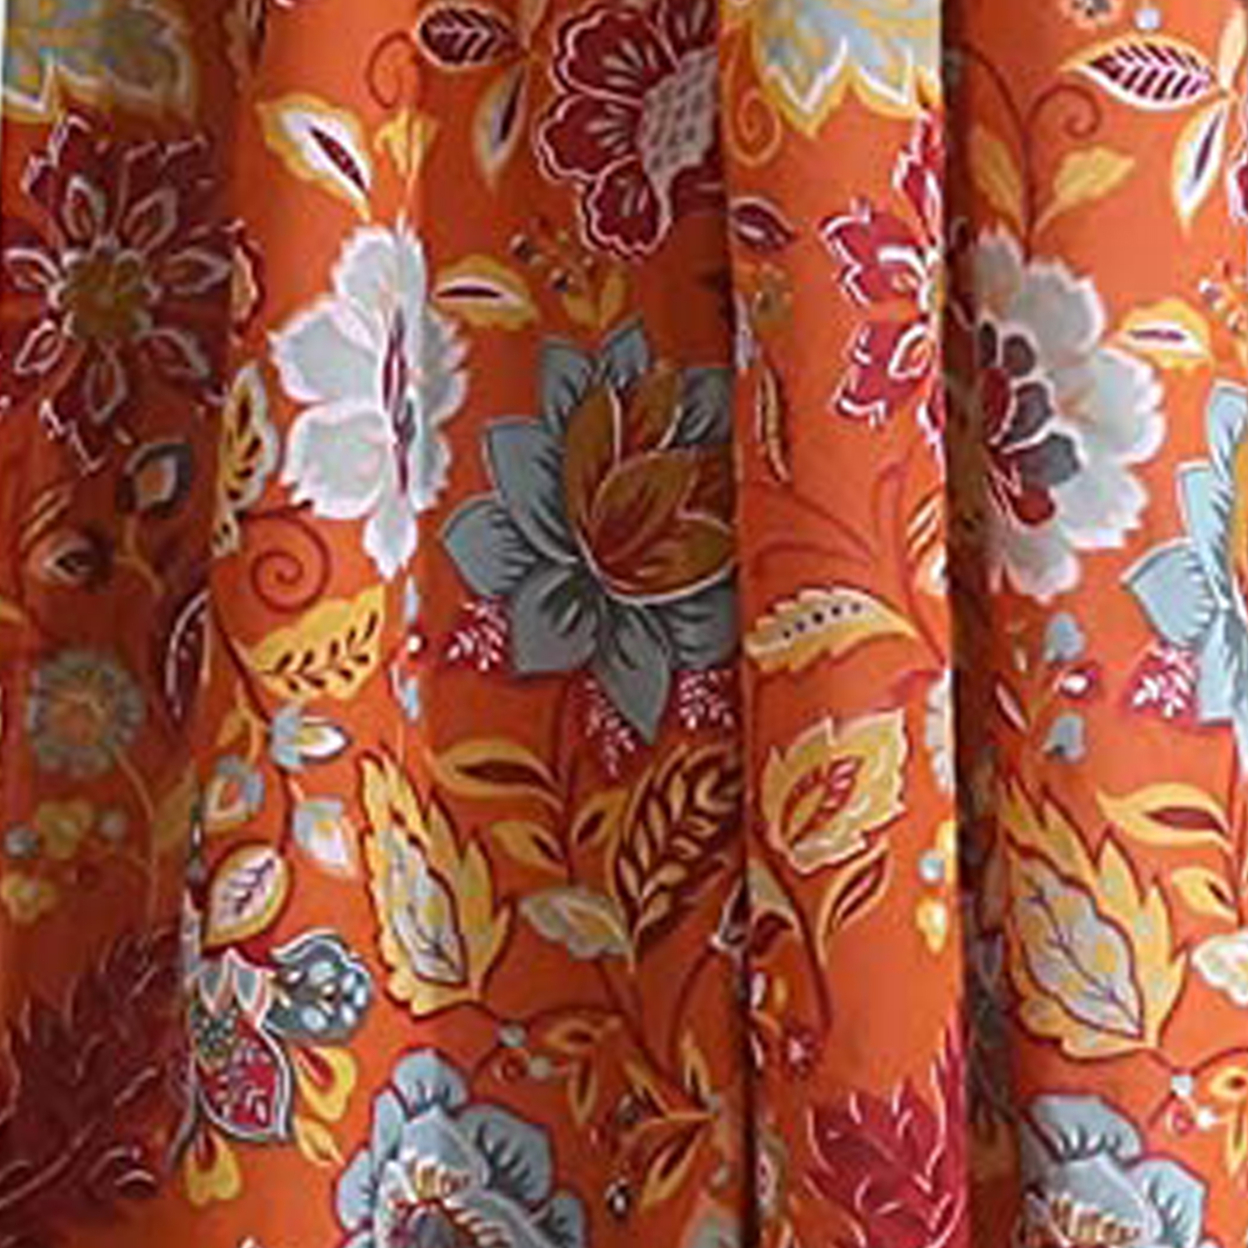 Paris 4 Piece Floral Print Fabric Curtain Panel With Ties, Orange